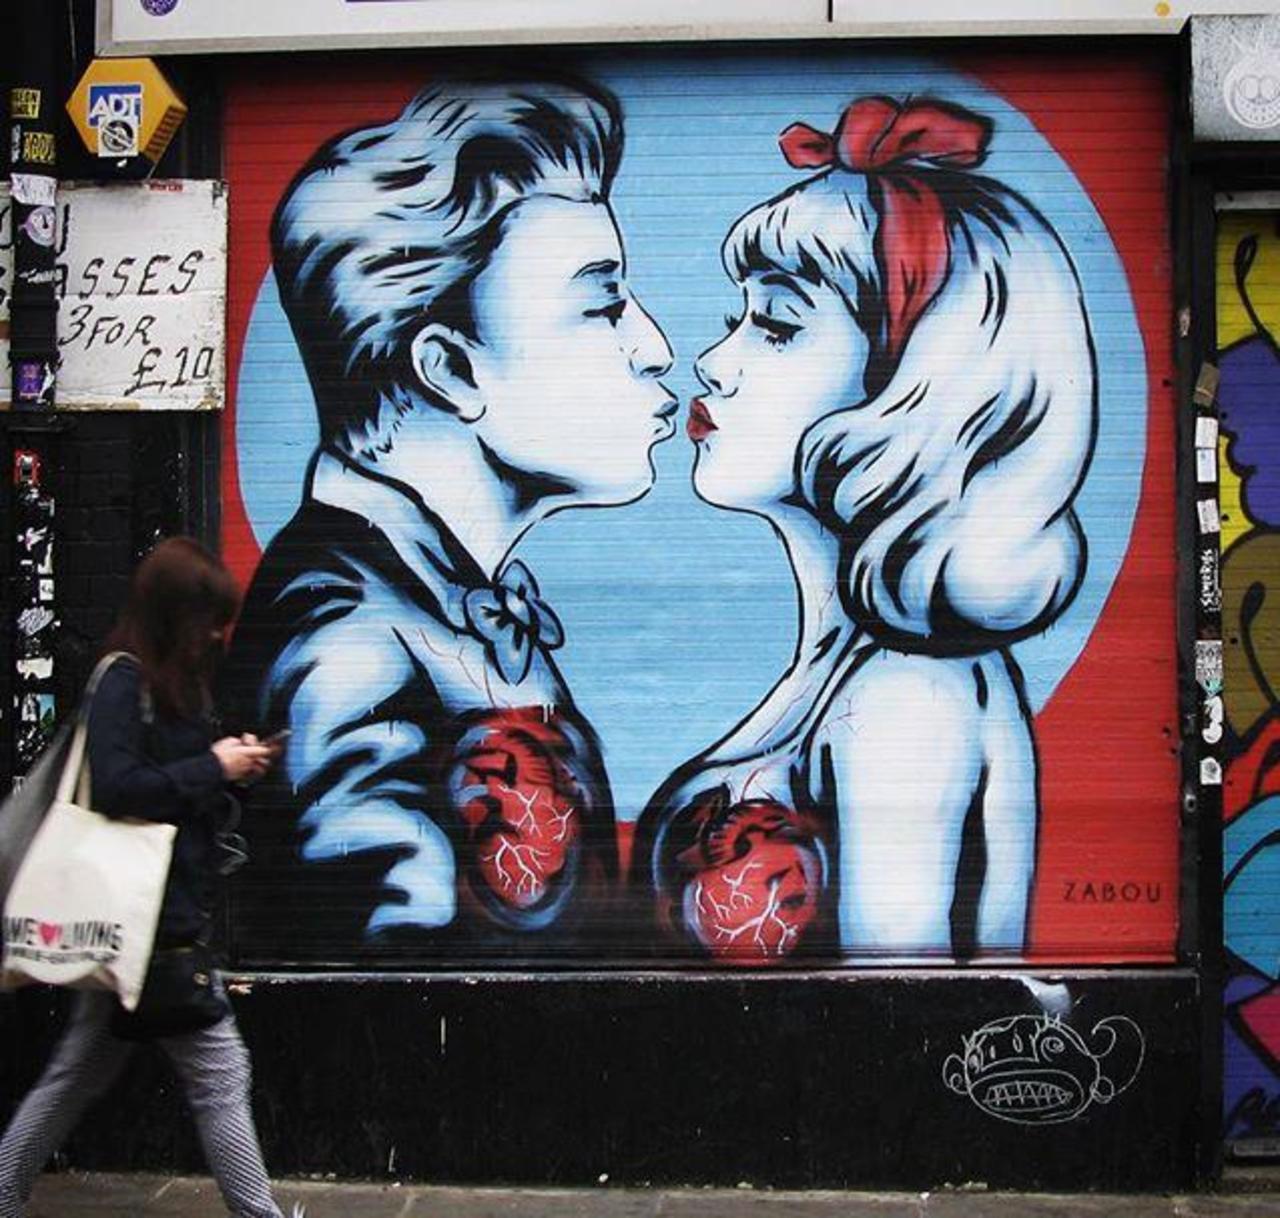 RT @GoogleStreetArt: Street Art by Zabou in London

#art #arte #graffiti #streetart http://t.co/pdIFExyUiC